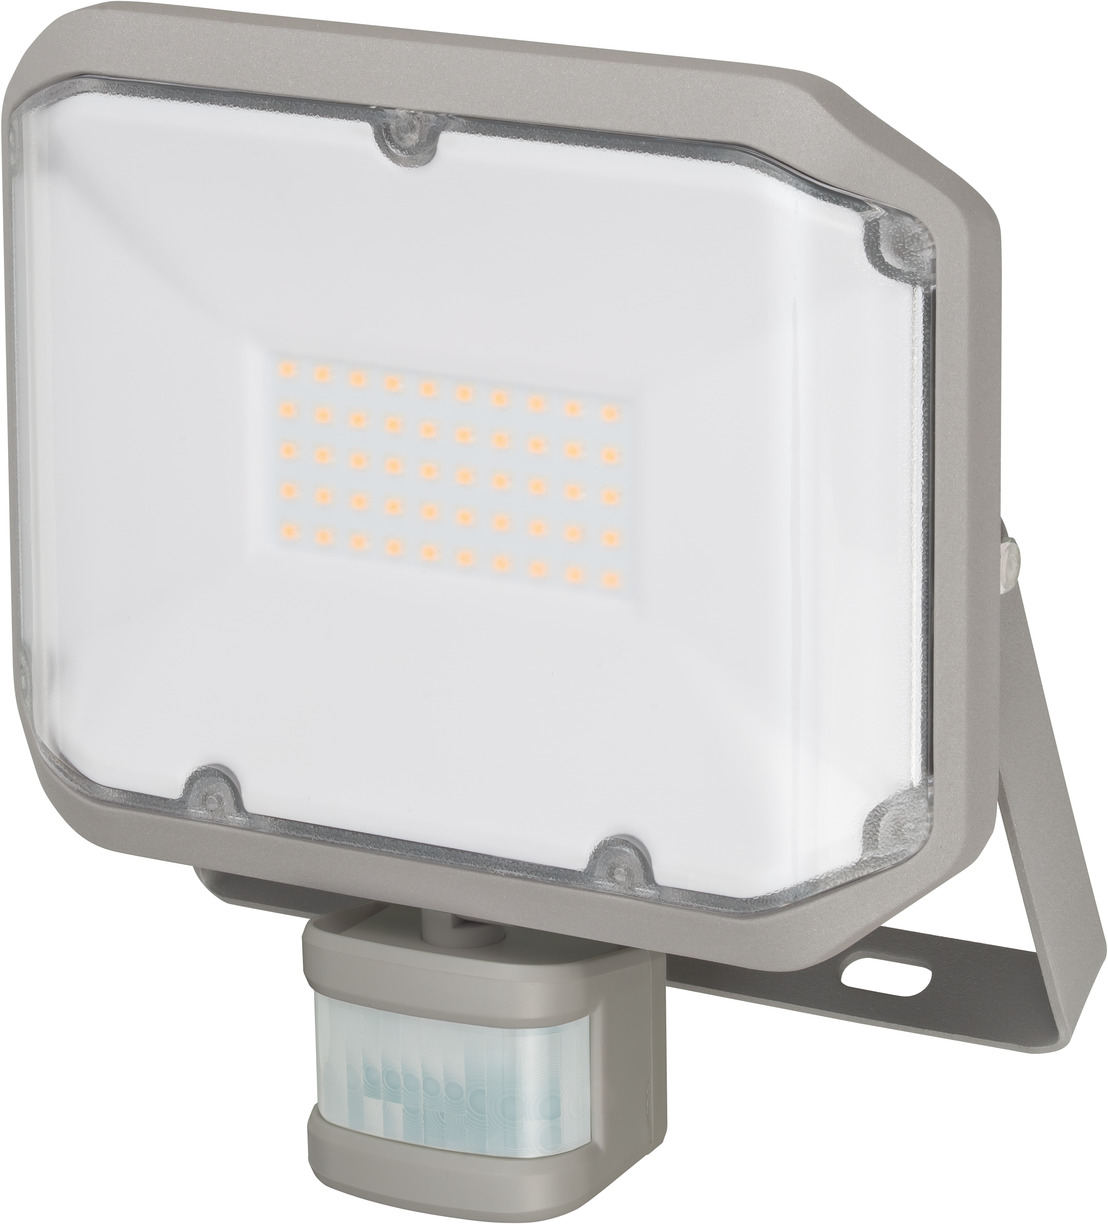 LED Strahler AL 3050 P mit Infrarot-Bewegungsmelder 30W, 3110lm, IP44 |  brennenstuhl®